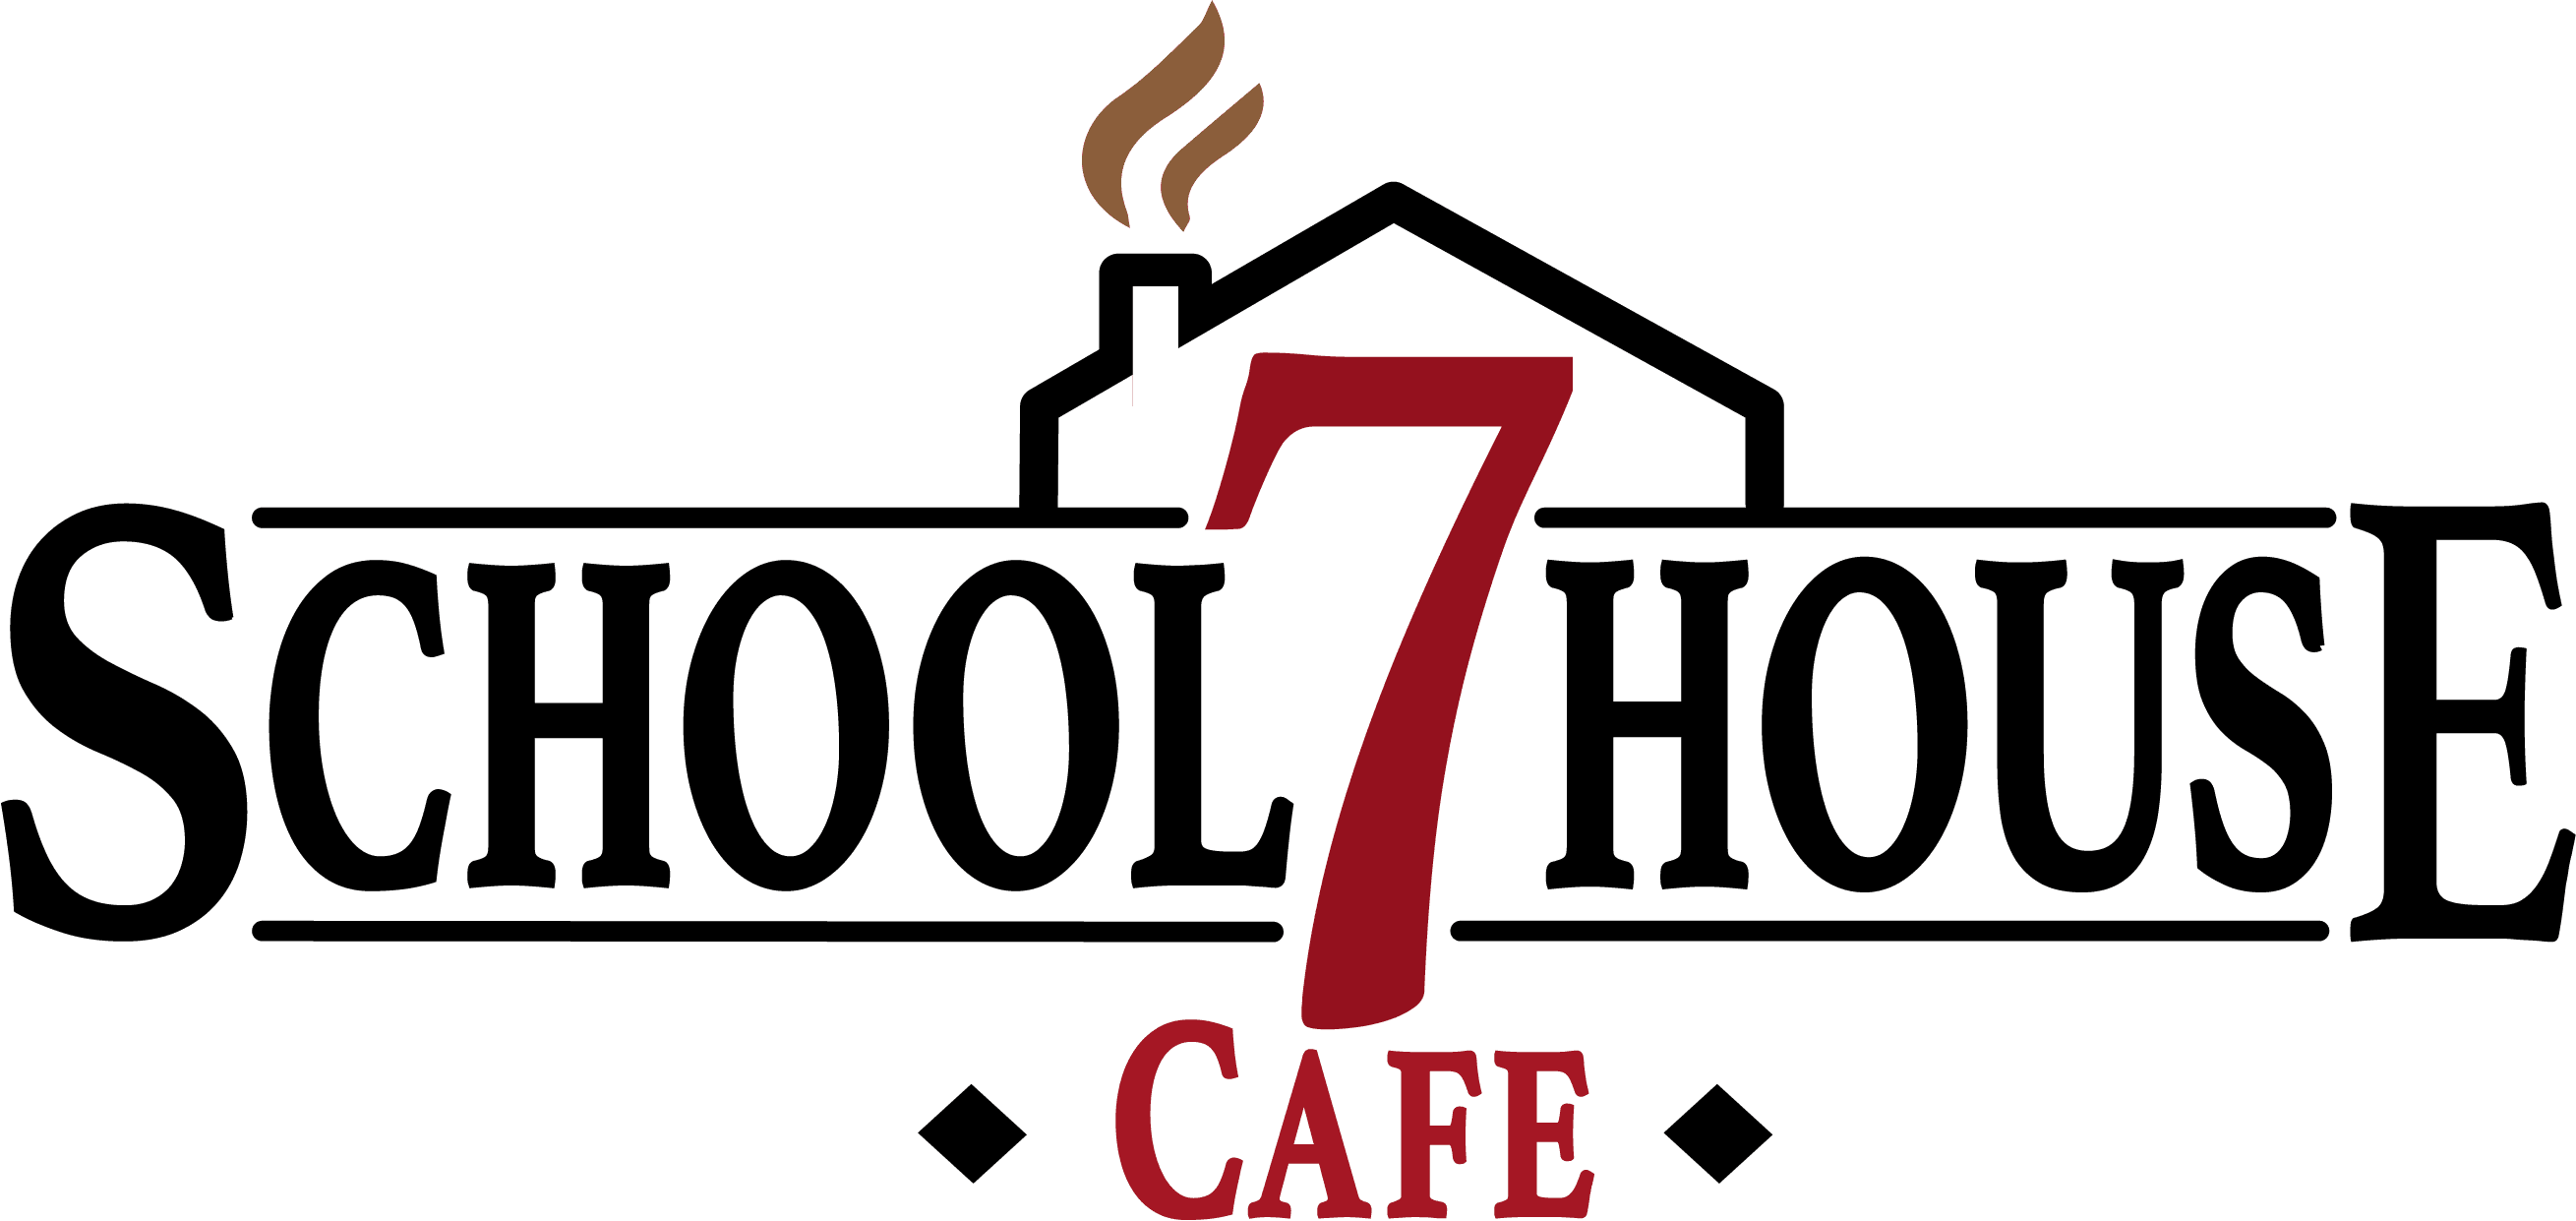 Schoolhouse 7 Cafe